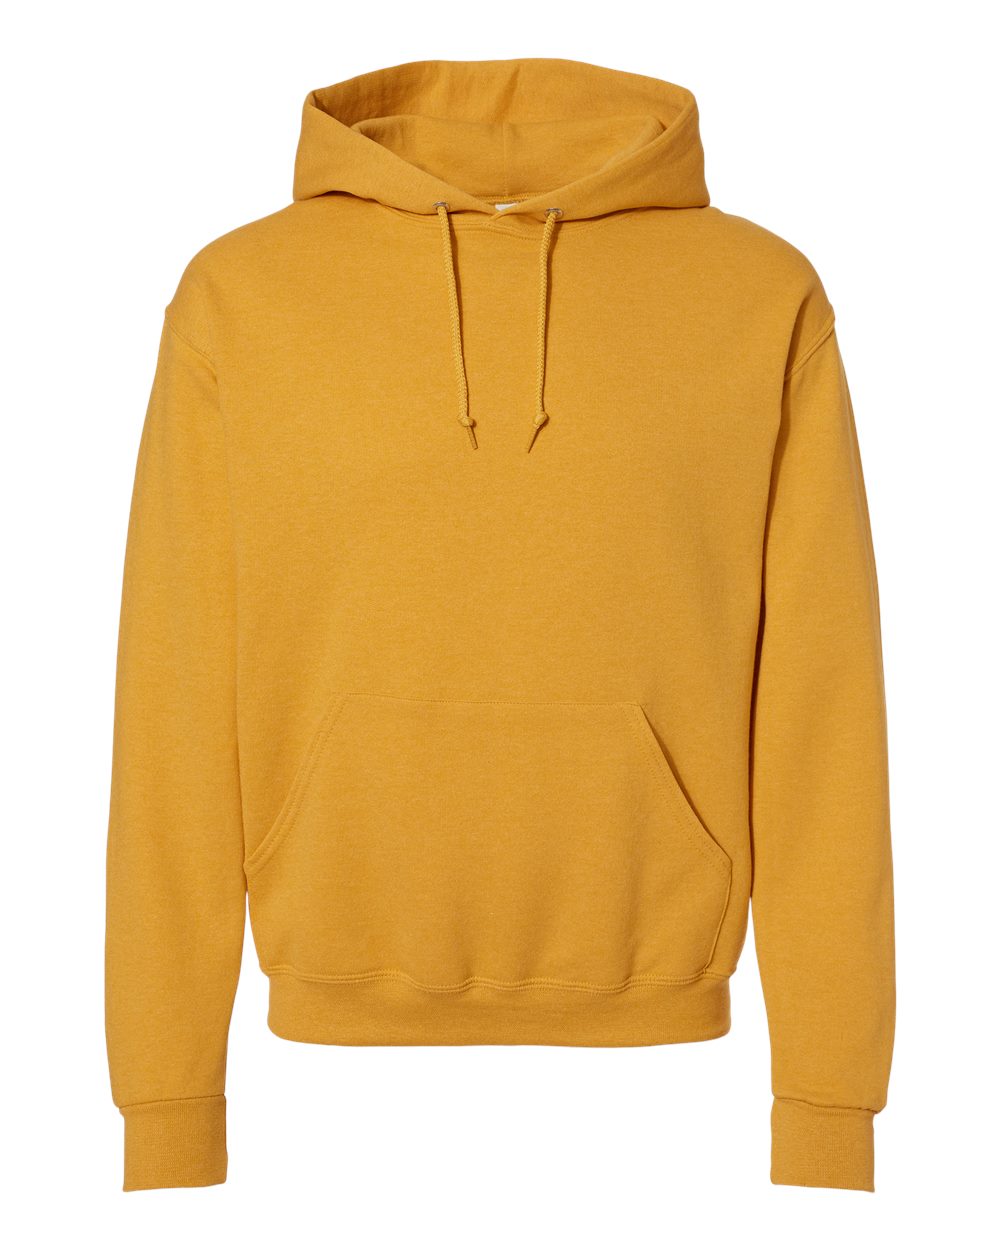 JERZEES - Hooded Sweatshirt - Mustard Heather